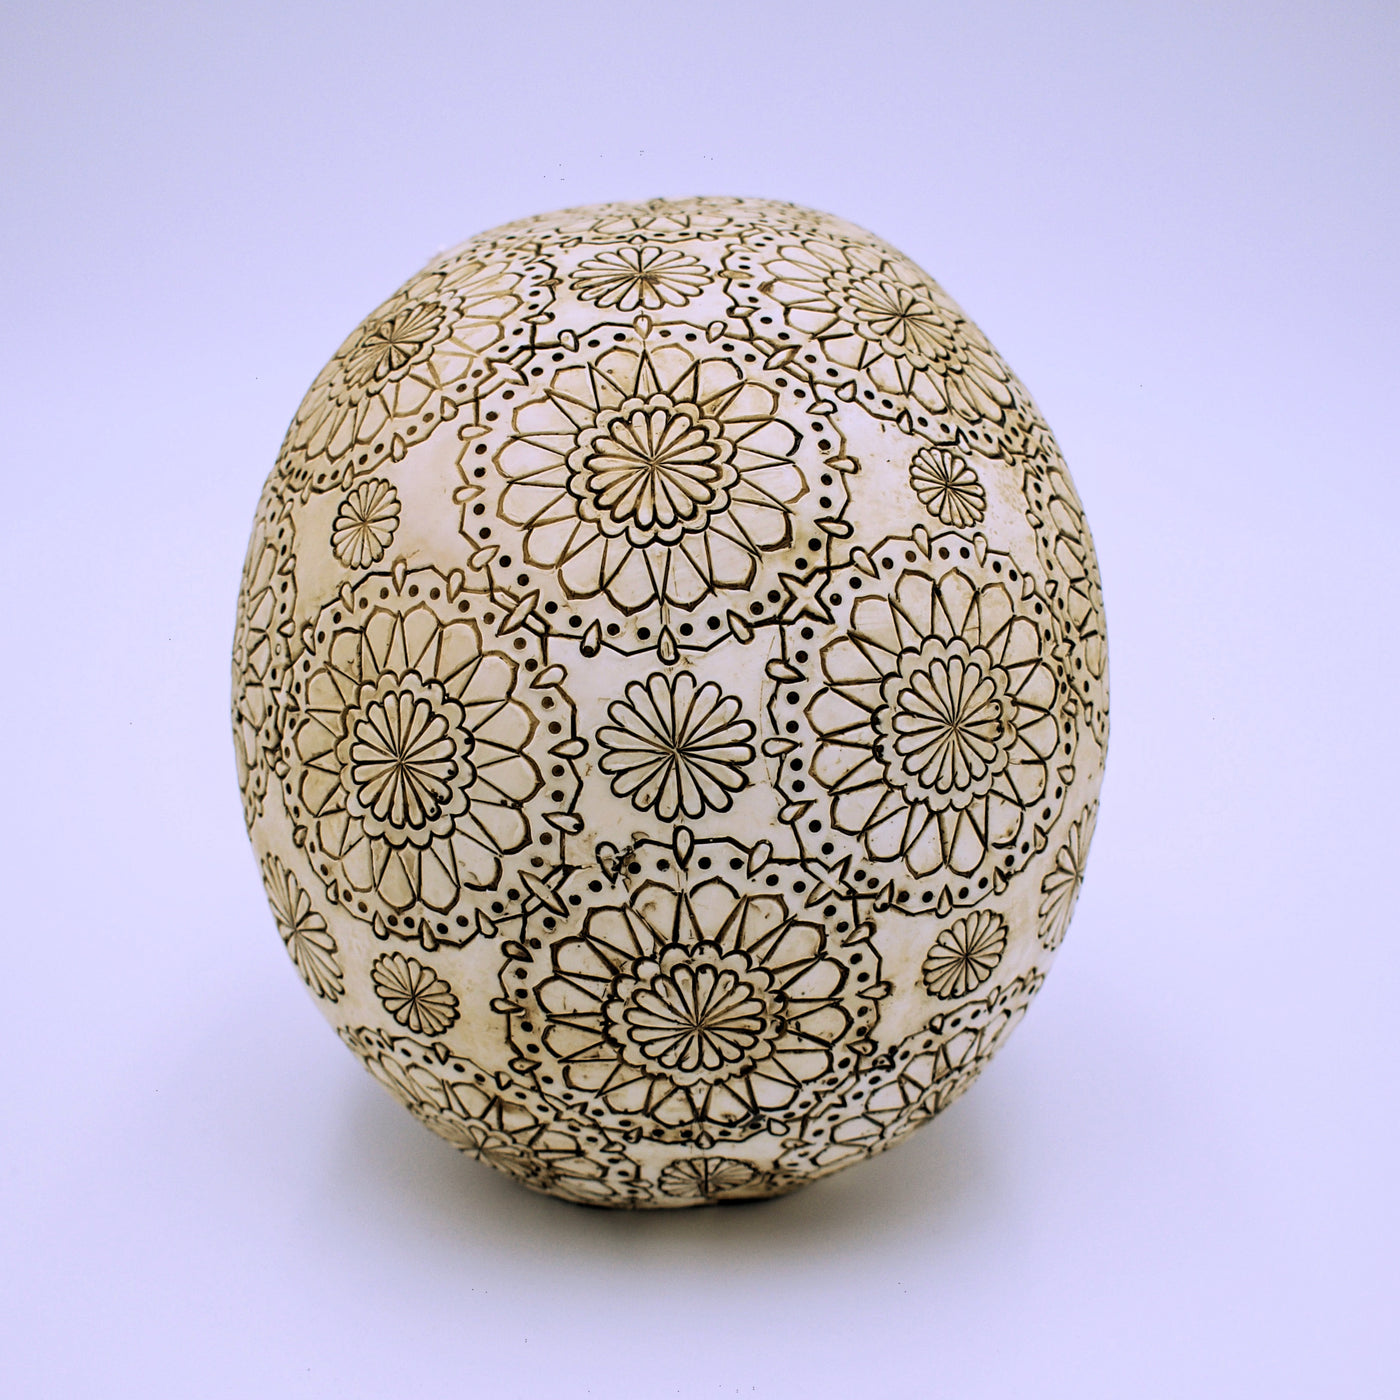 Mandala Style Skull Sculpture - The Cranio Collections